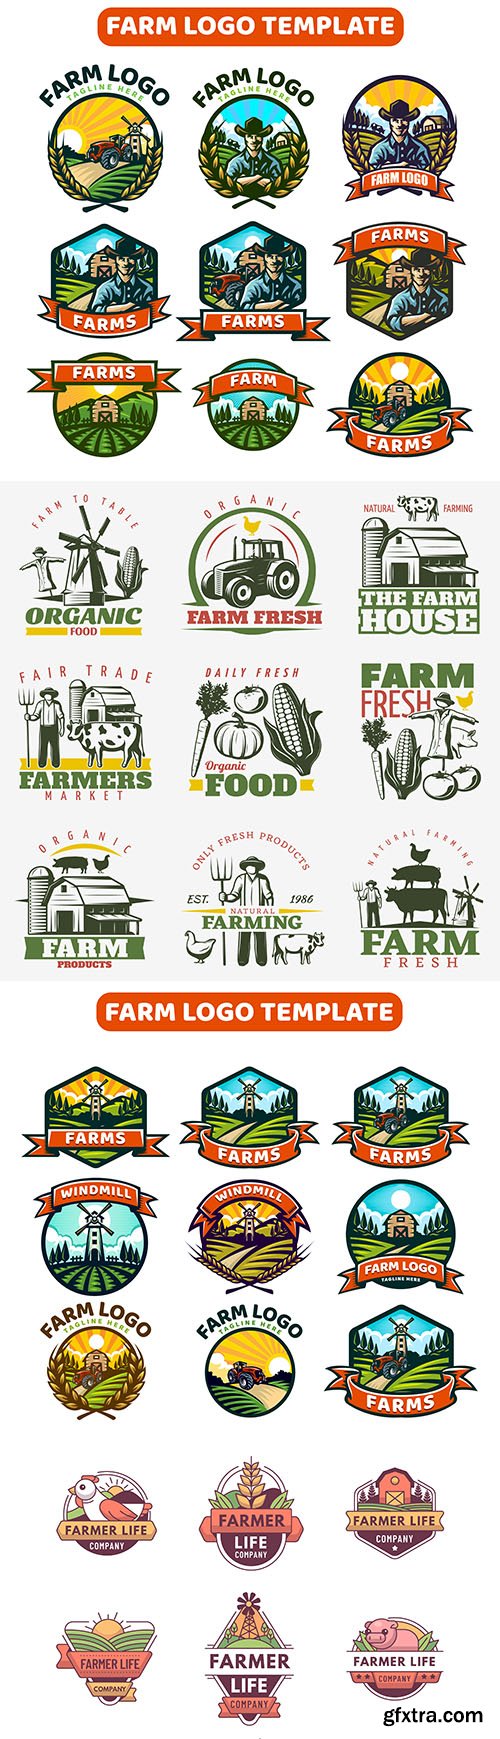 Farm logos design brand Name Company corporate